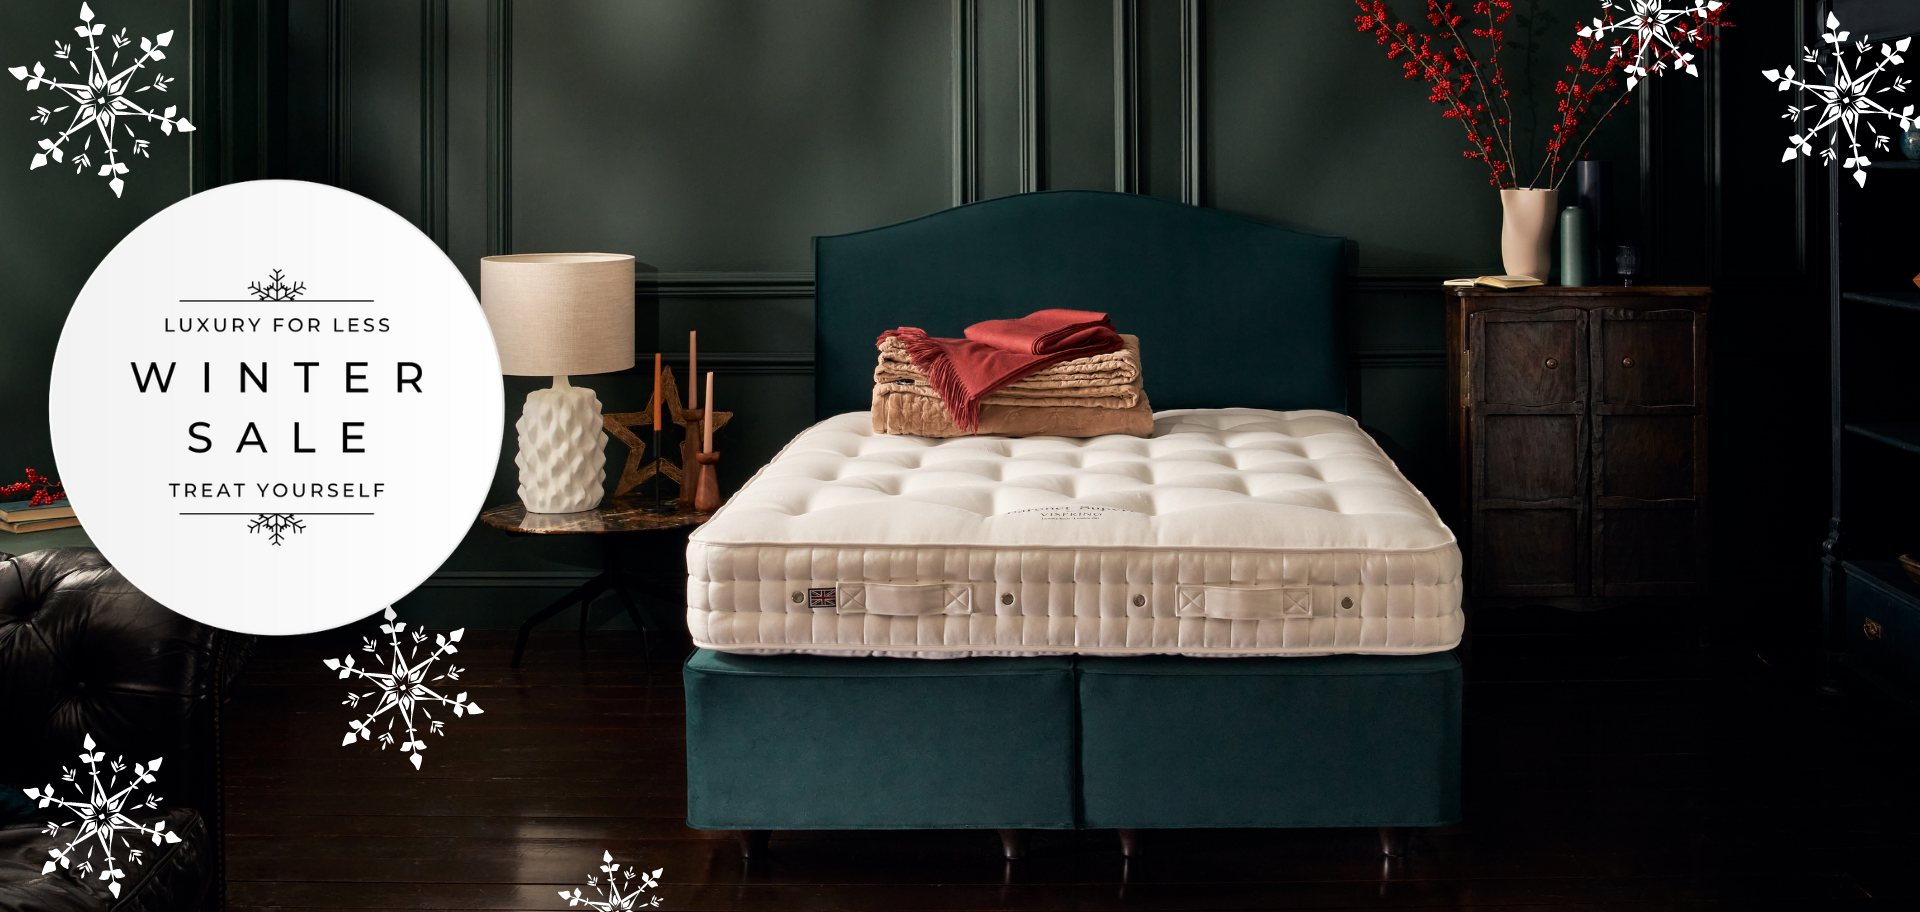 Vispring, the makers of Luxury Handmade British Beds